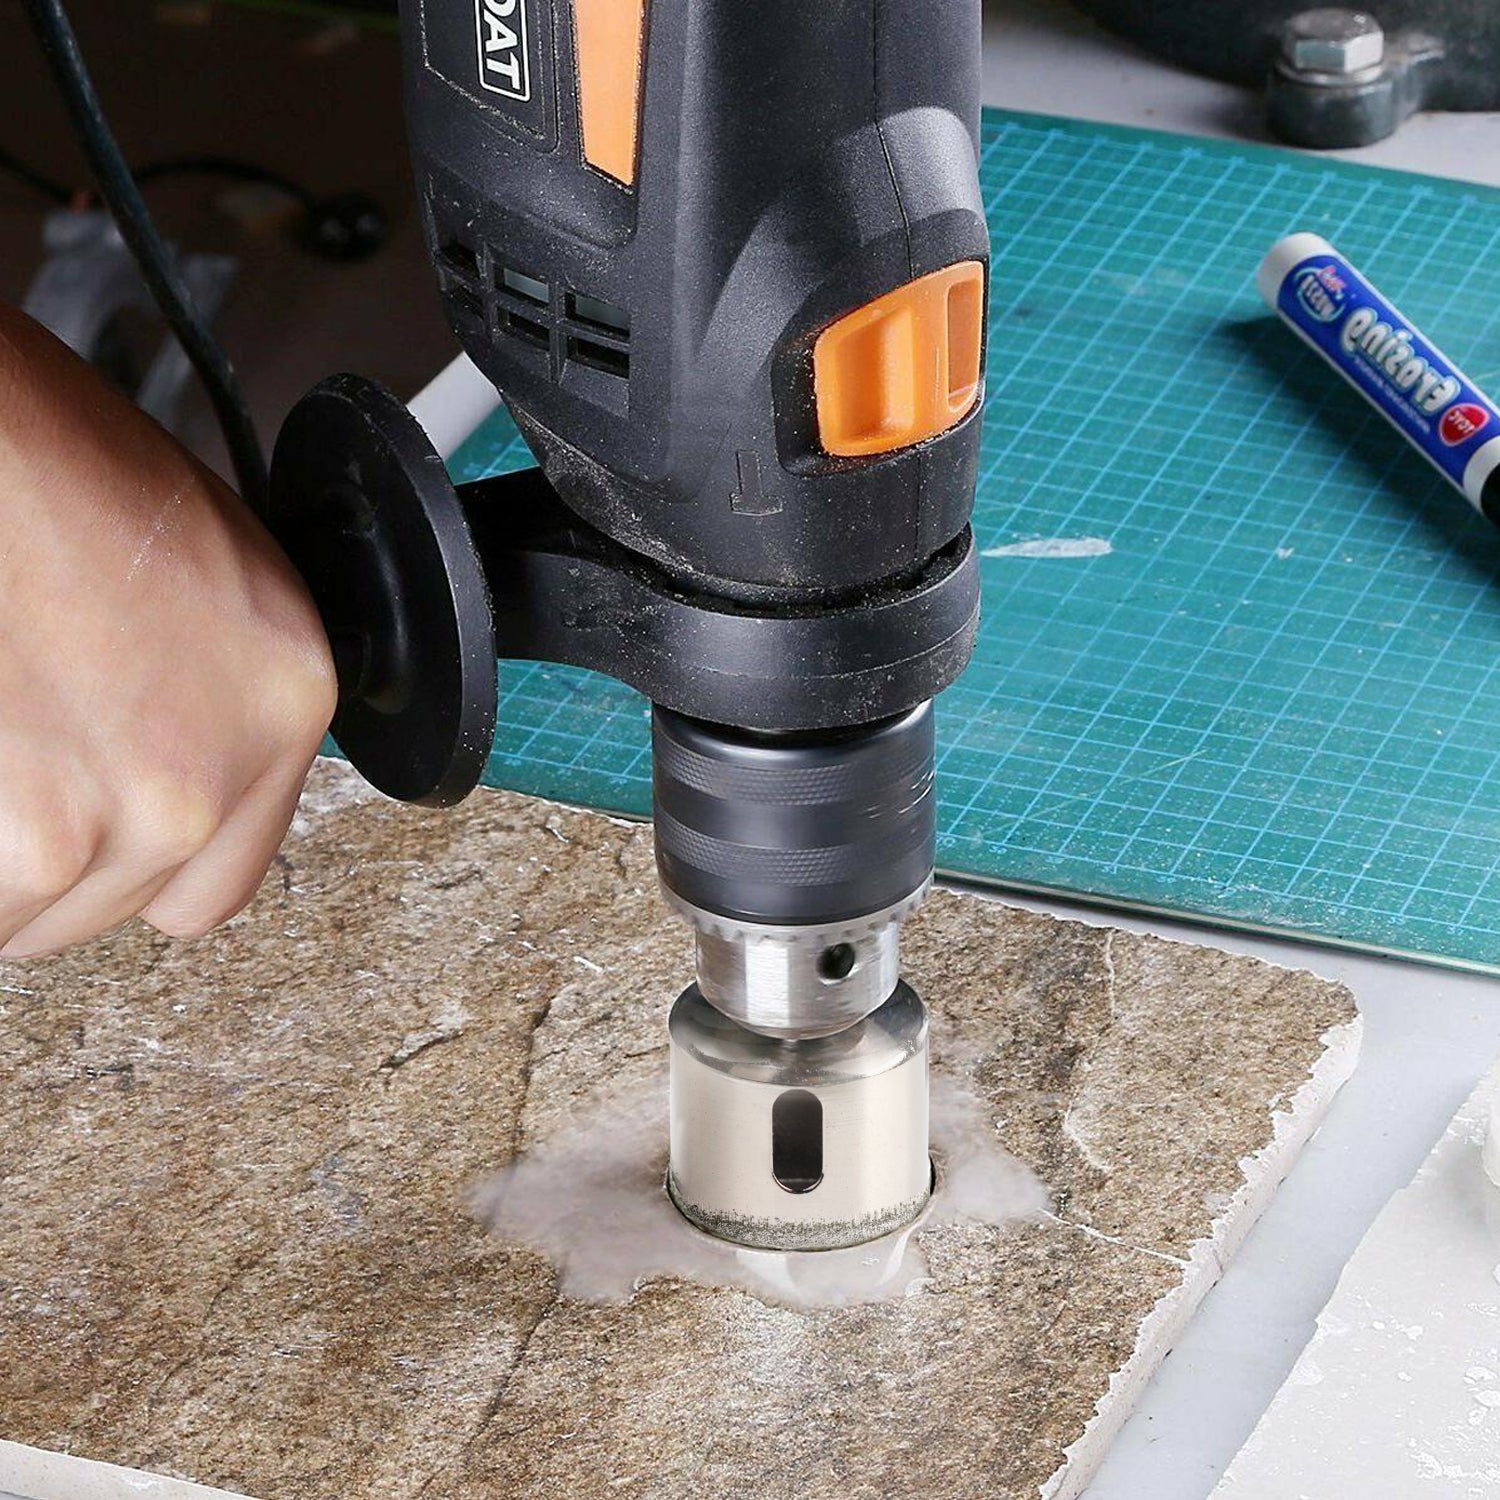 60mm Diamond Hole Saw Kit Tile Drill Bits for Ceramic, Glass, Tile, Porcelain, Marble, Granite